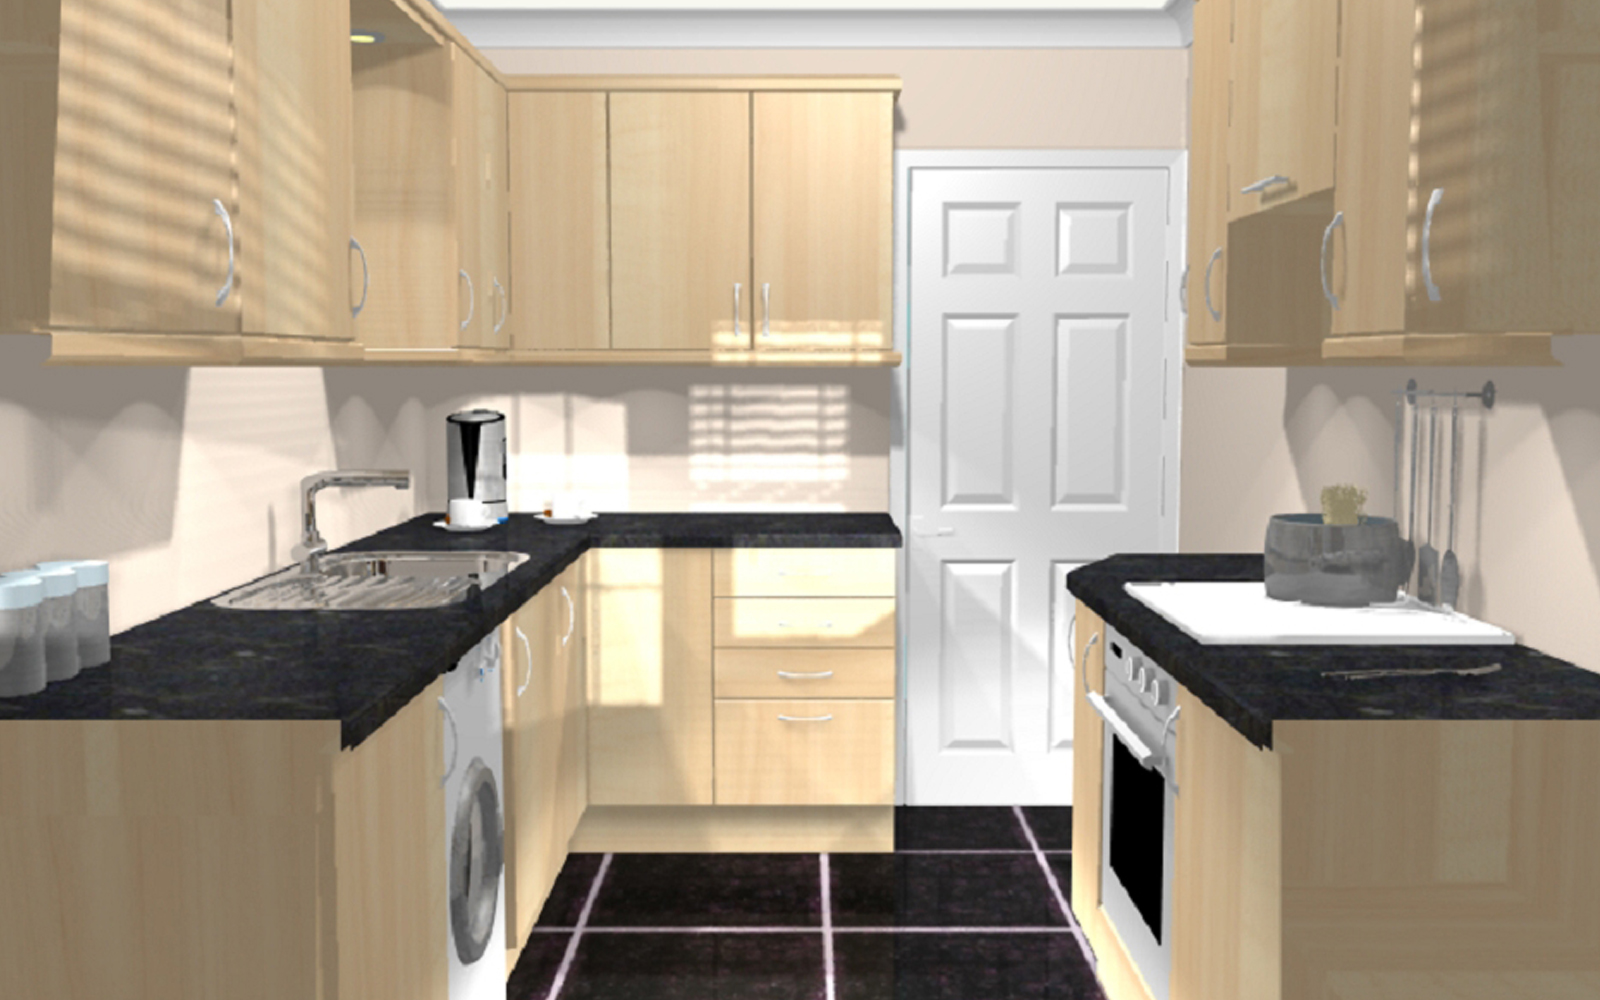 Economy range modular kitchen design
                                  